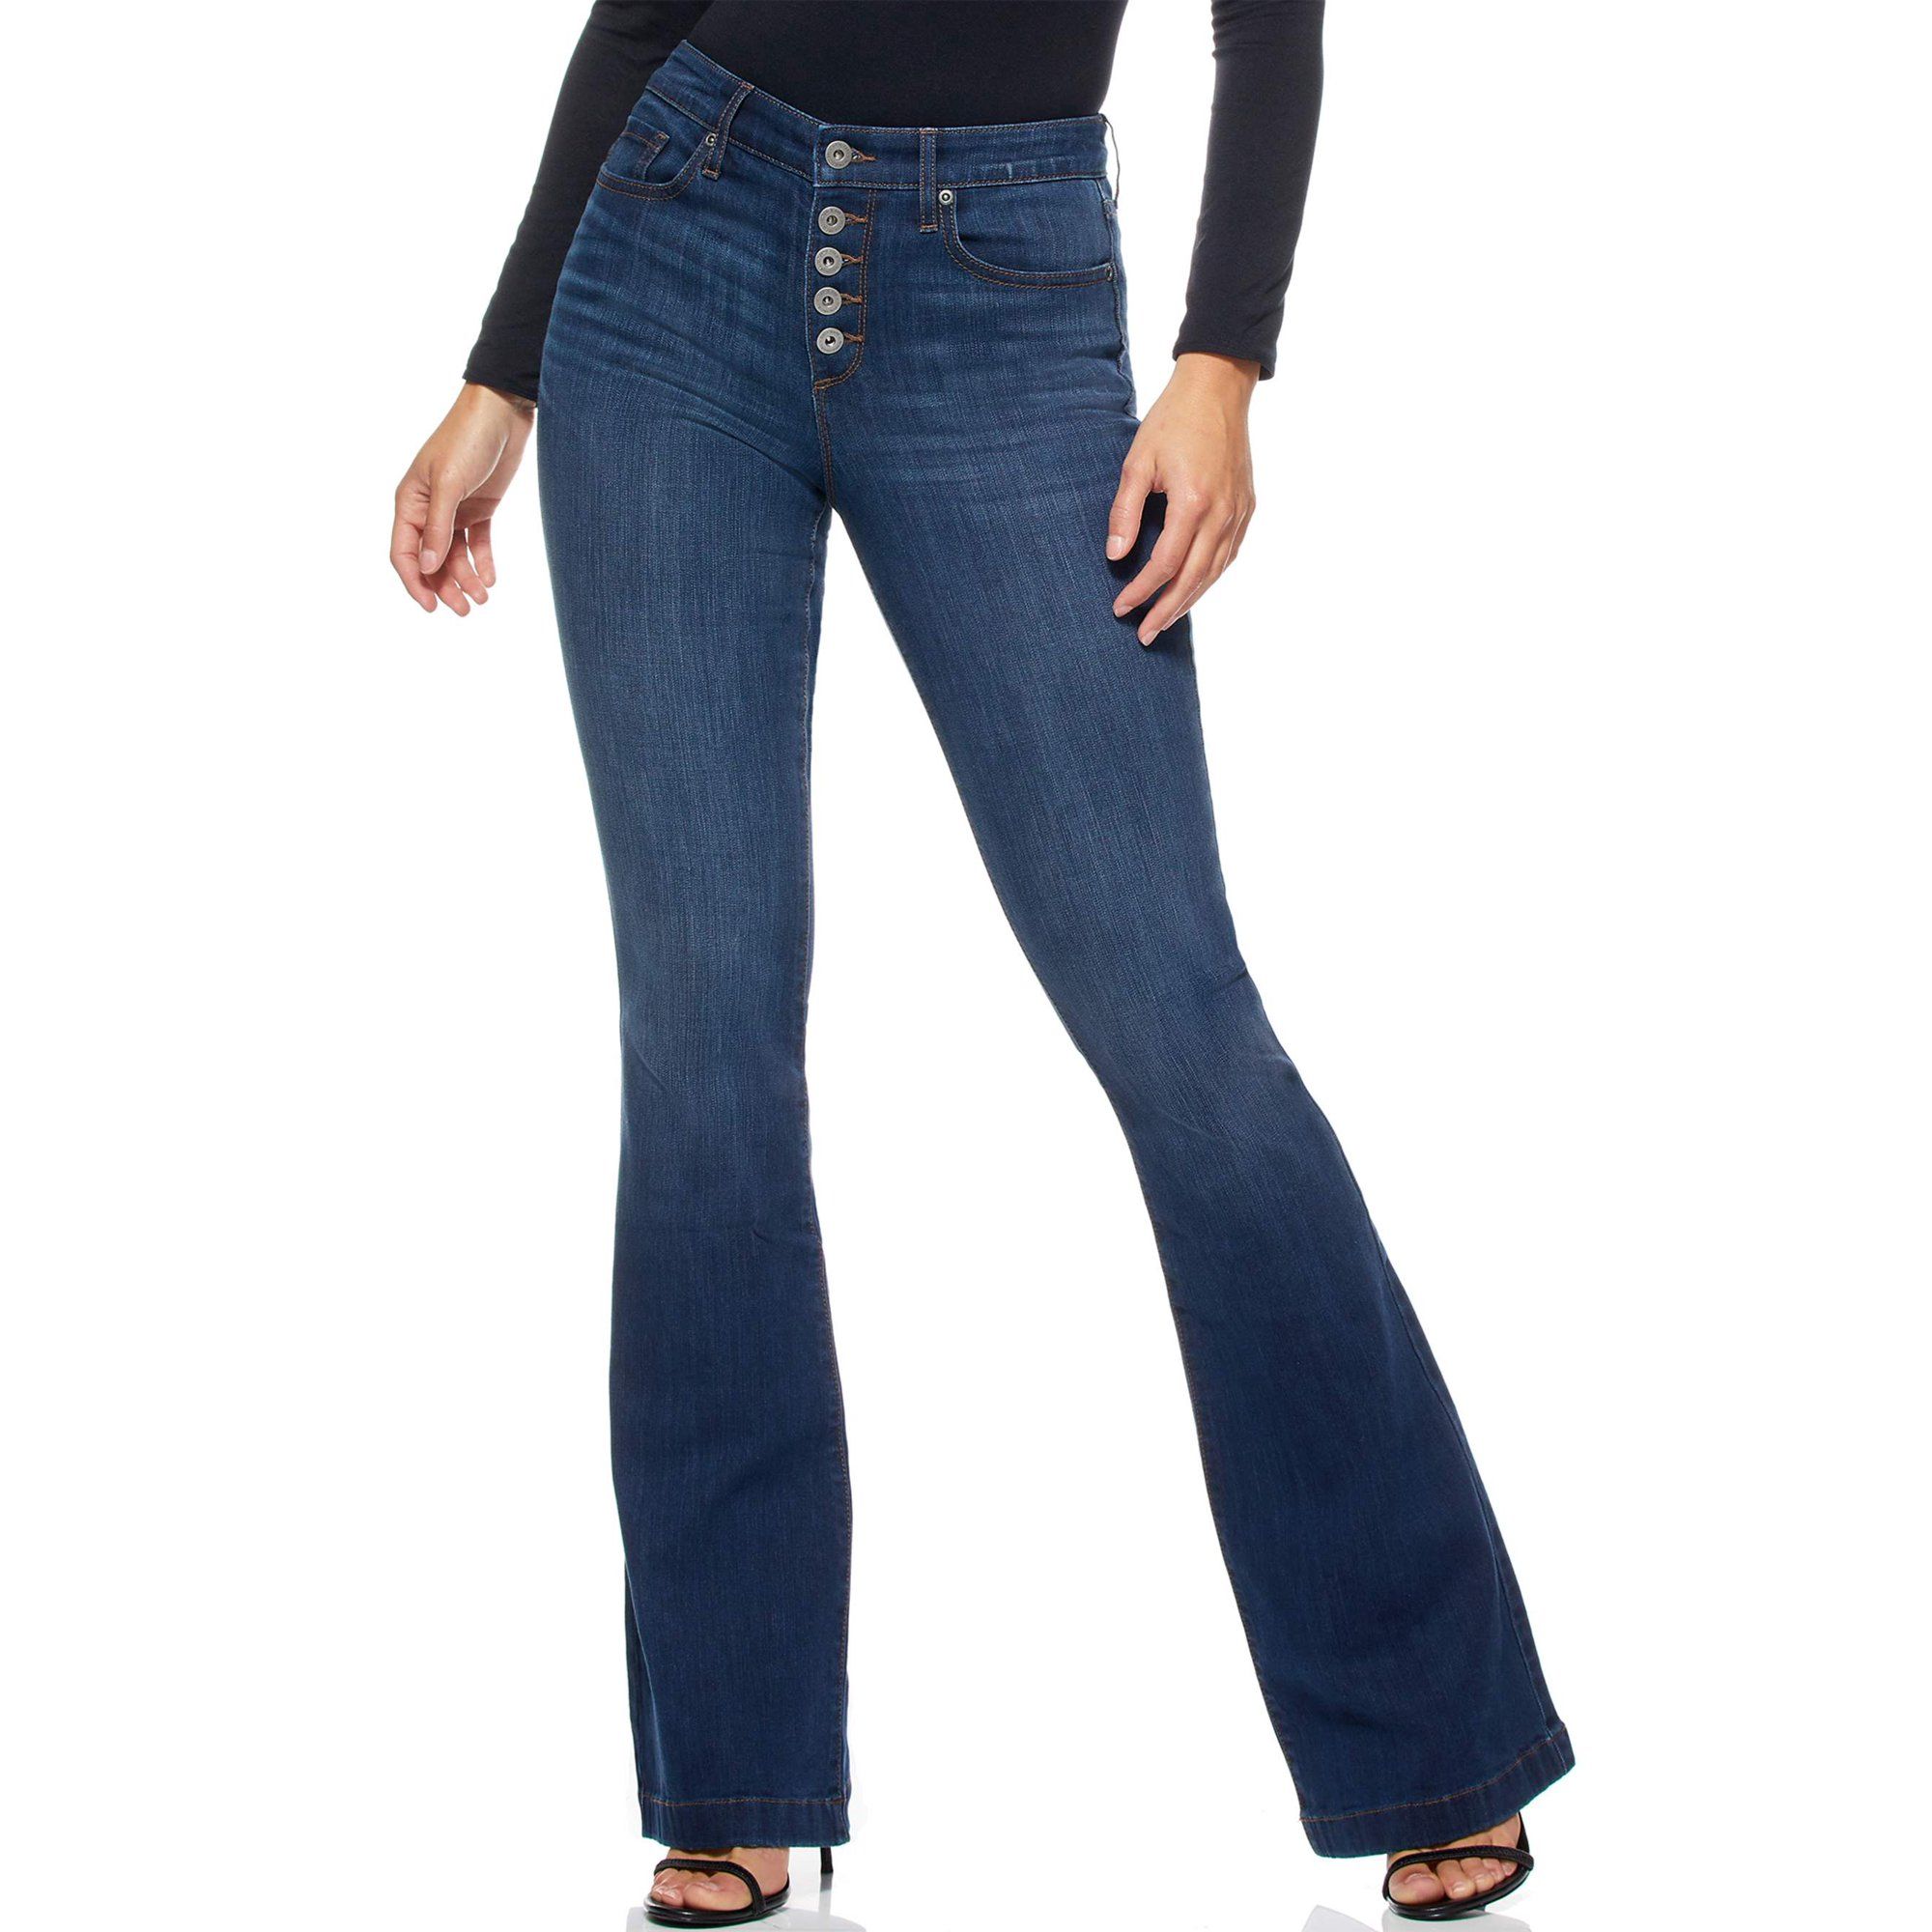 Sofia Jeans Melisa Flare High Waist Stretch Jean Women's | Walmart (US)